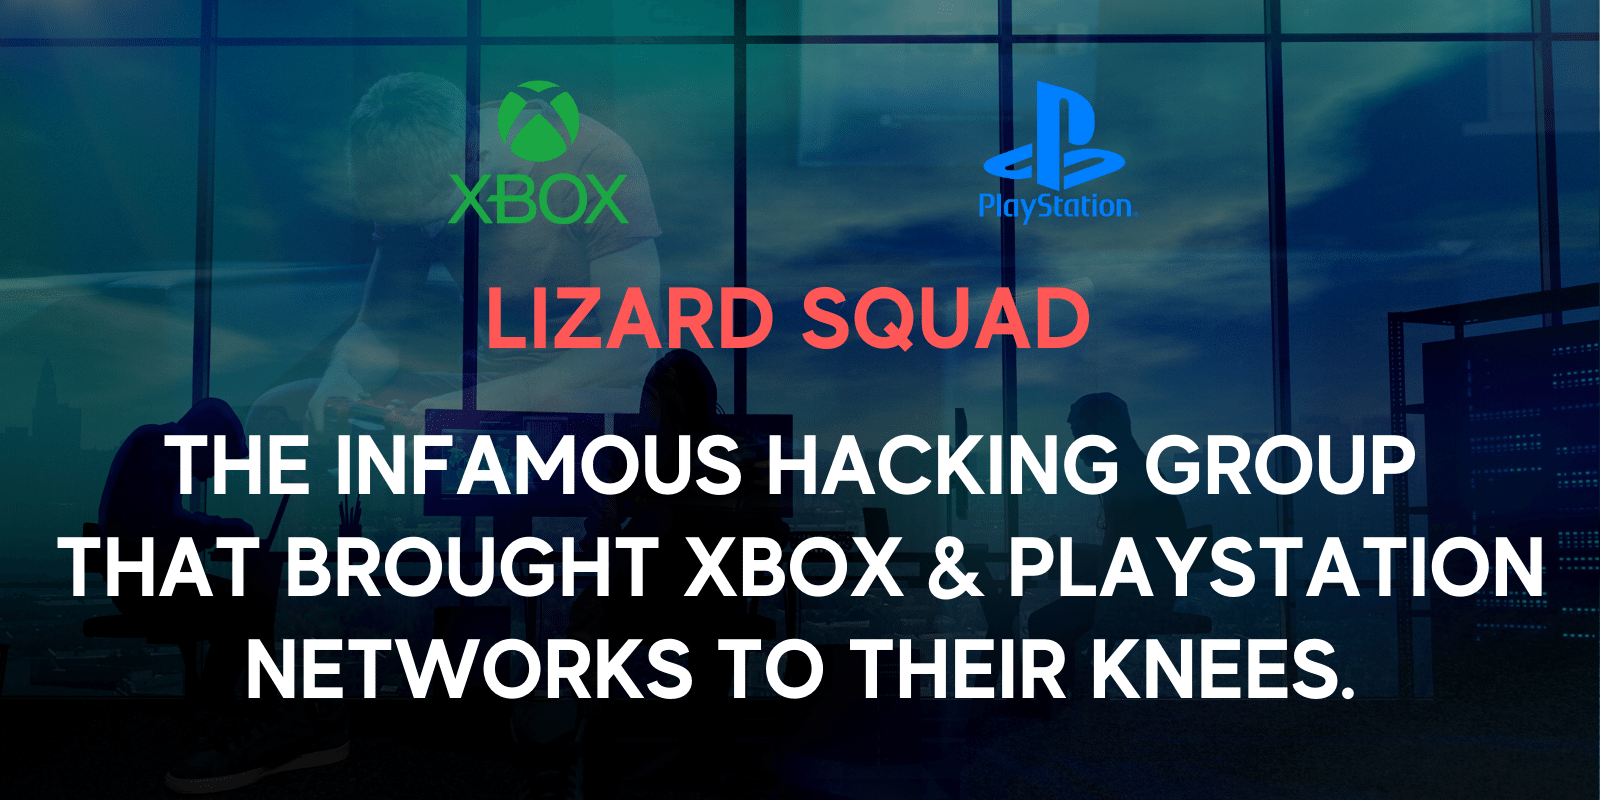 Lizard squad Lizard squad Xbox PlayStation DDoS attacks